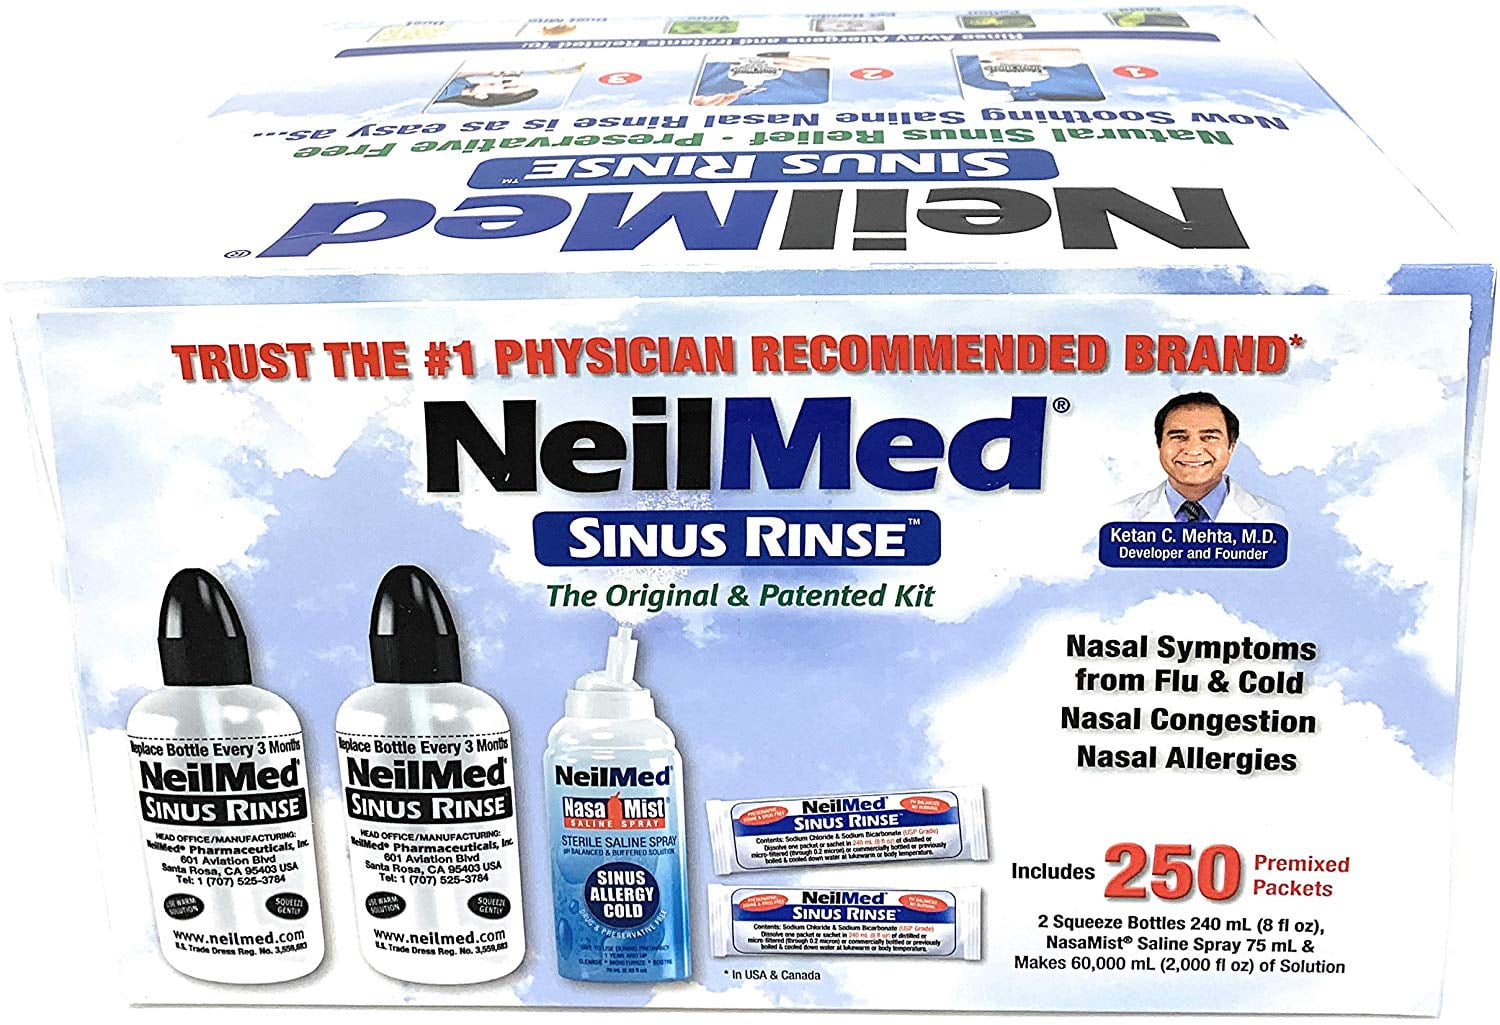 neilmed-sinus-rinse-2-bottles-250-premixed-packets-walmart